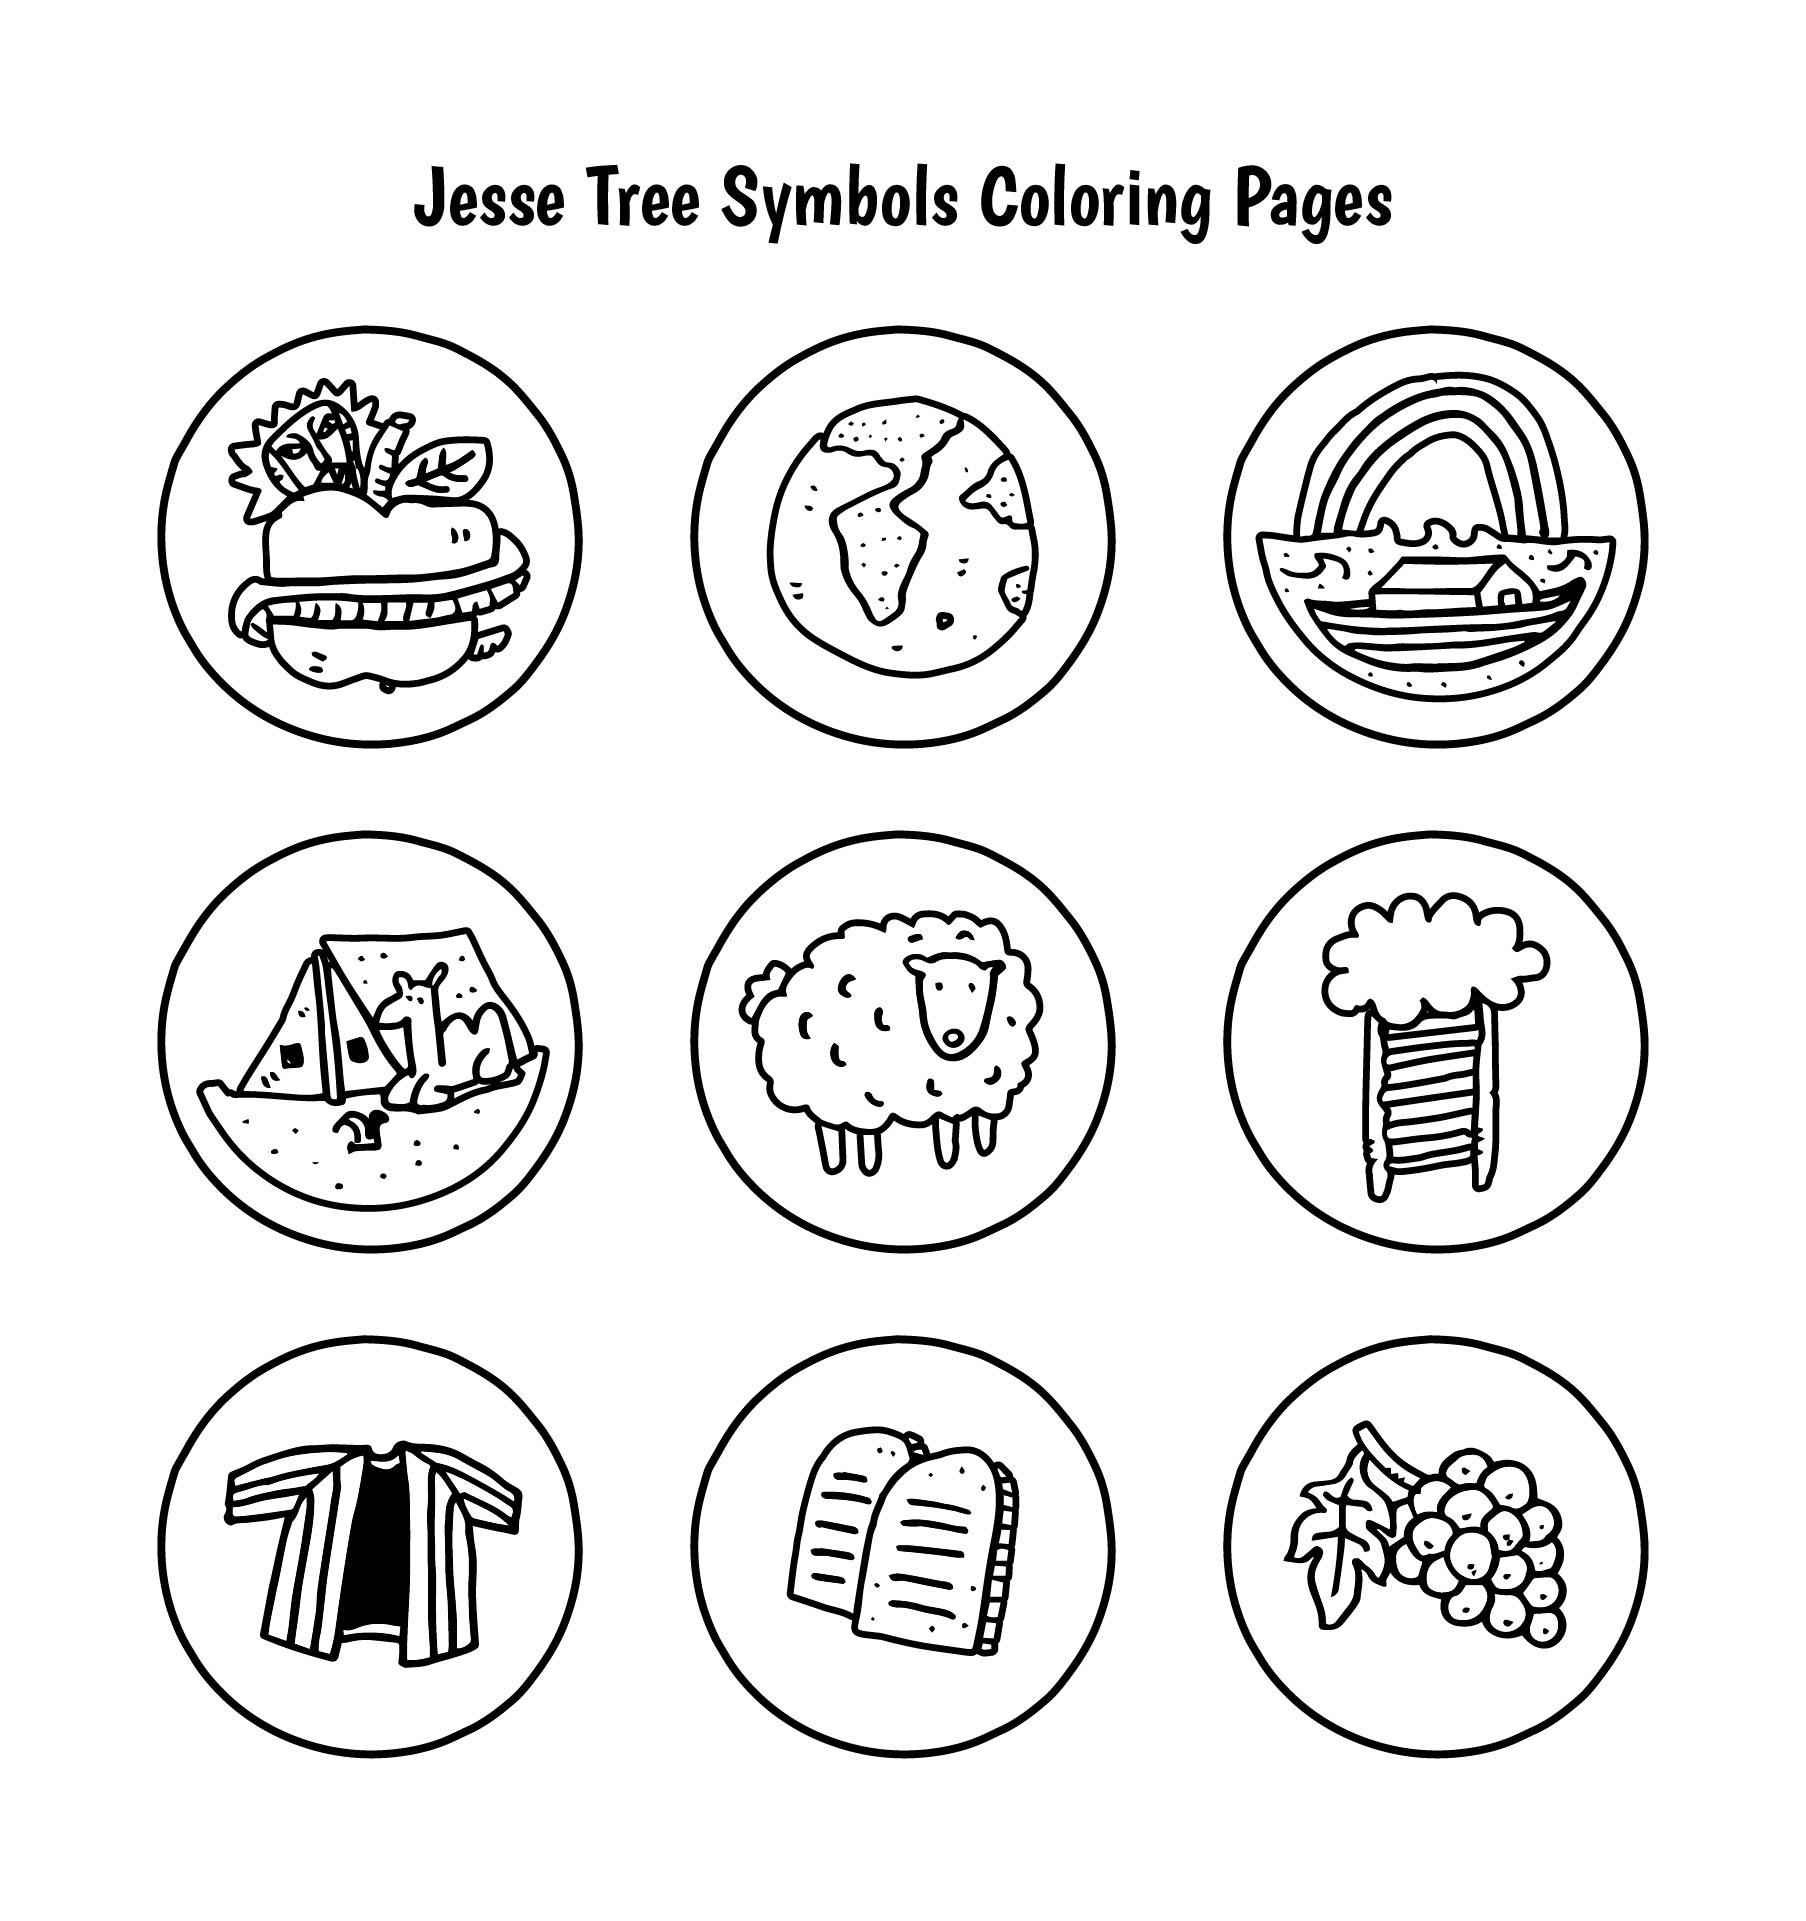 Printable Jesse Tree Symbols